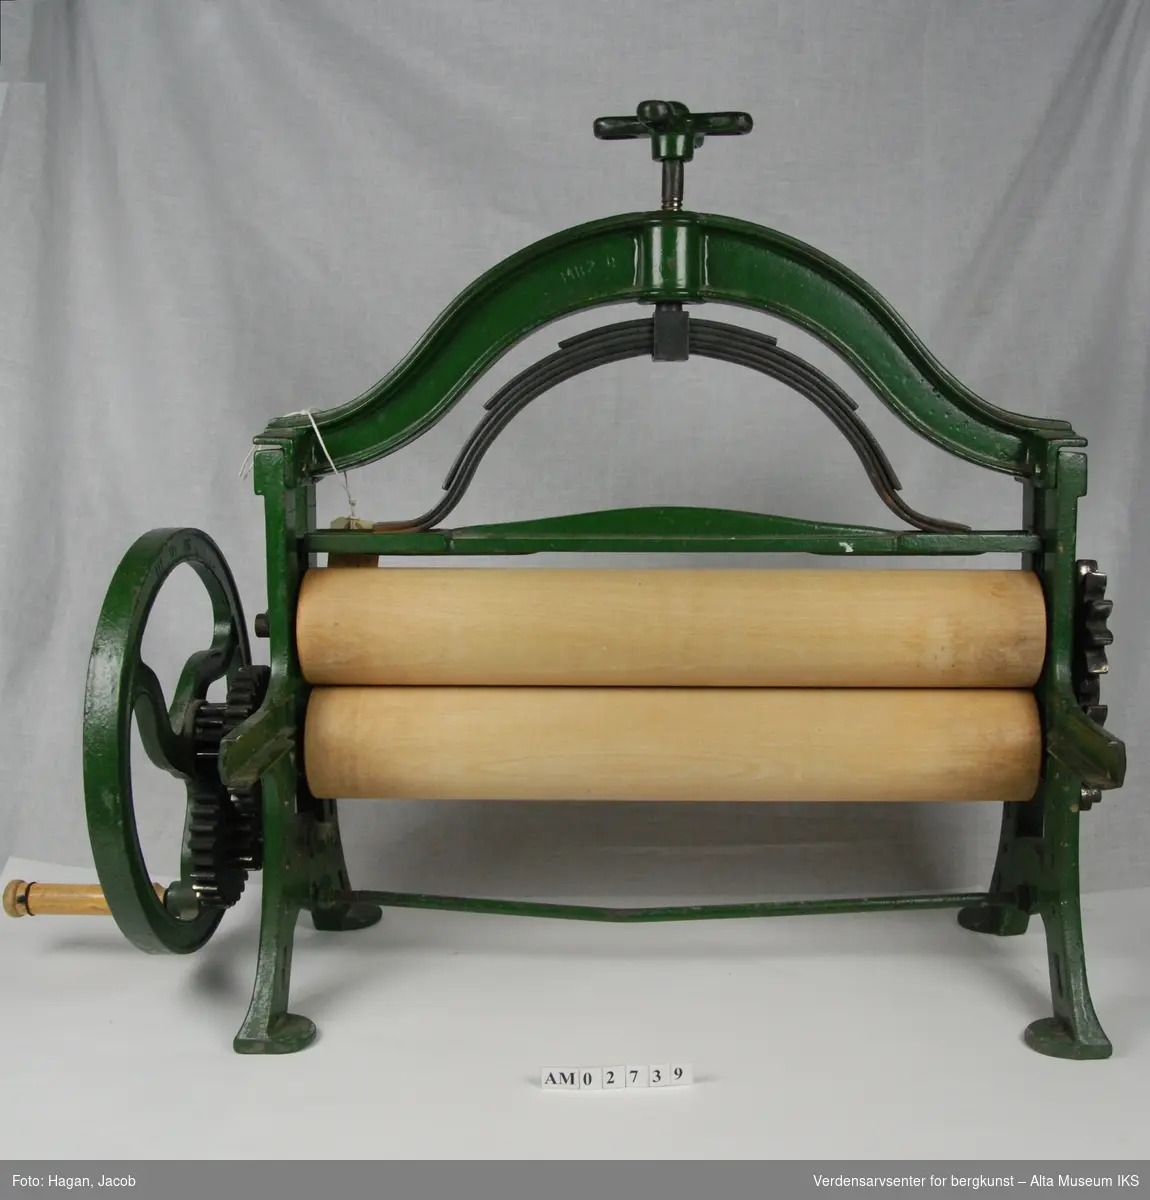 Form: Klassisk klesrulle med toppregult press med regulerbart press, manglende sidefjøler.